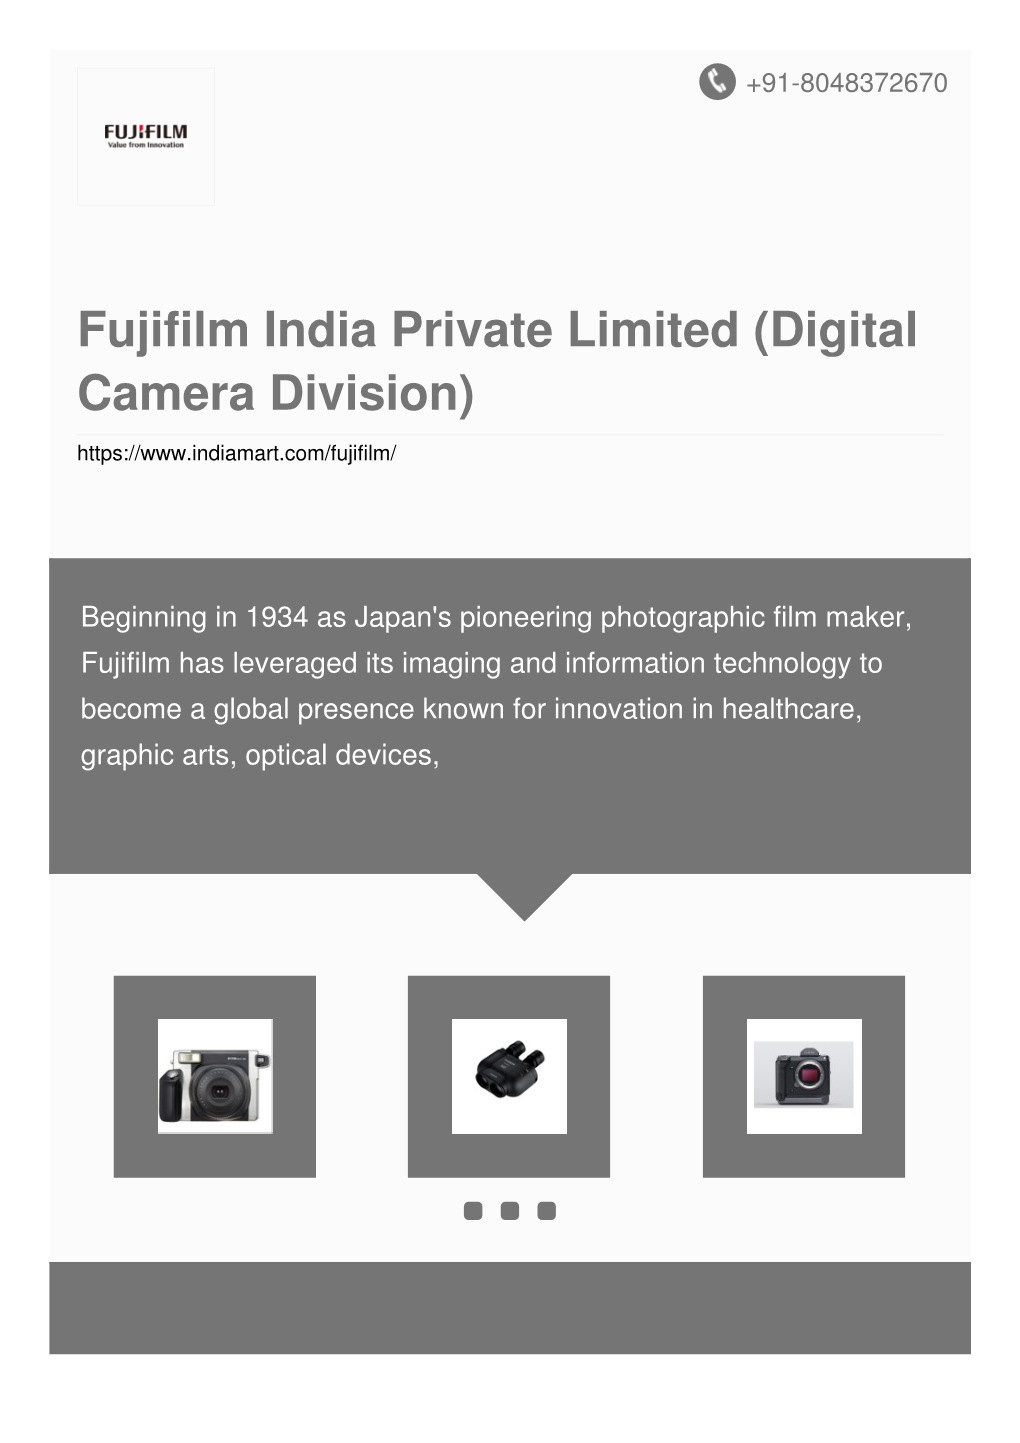 Fujifilm India Private Limited (Digital Camera Division)